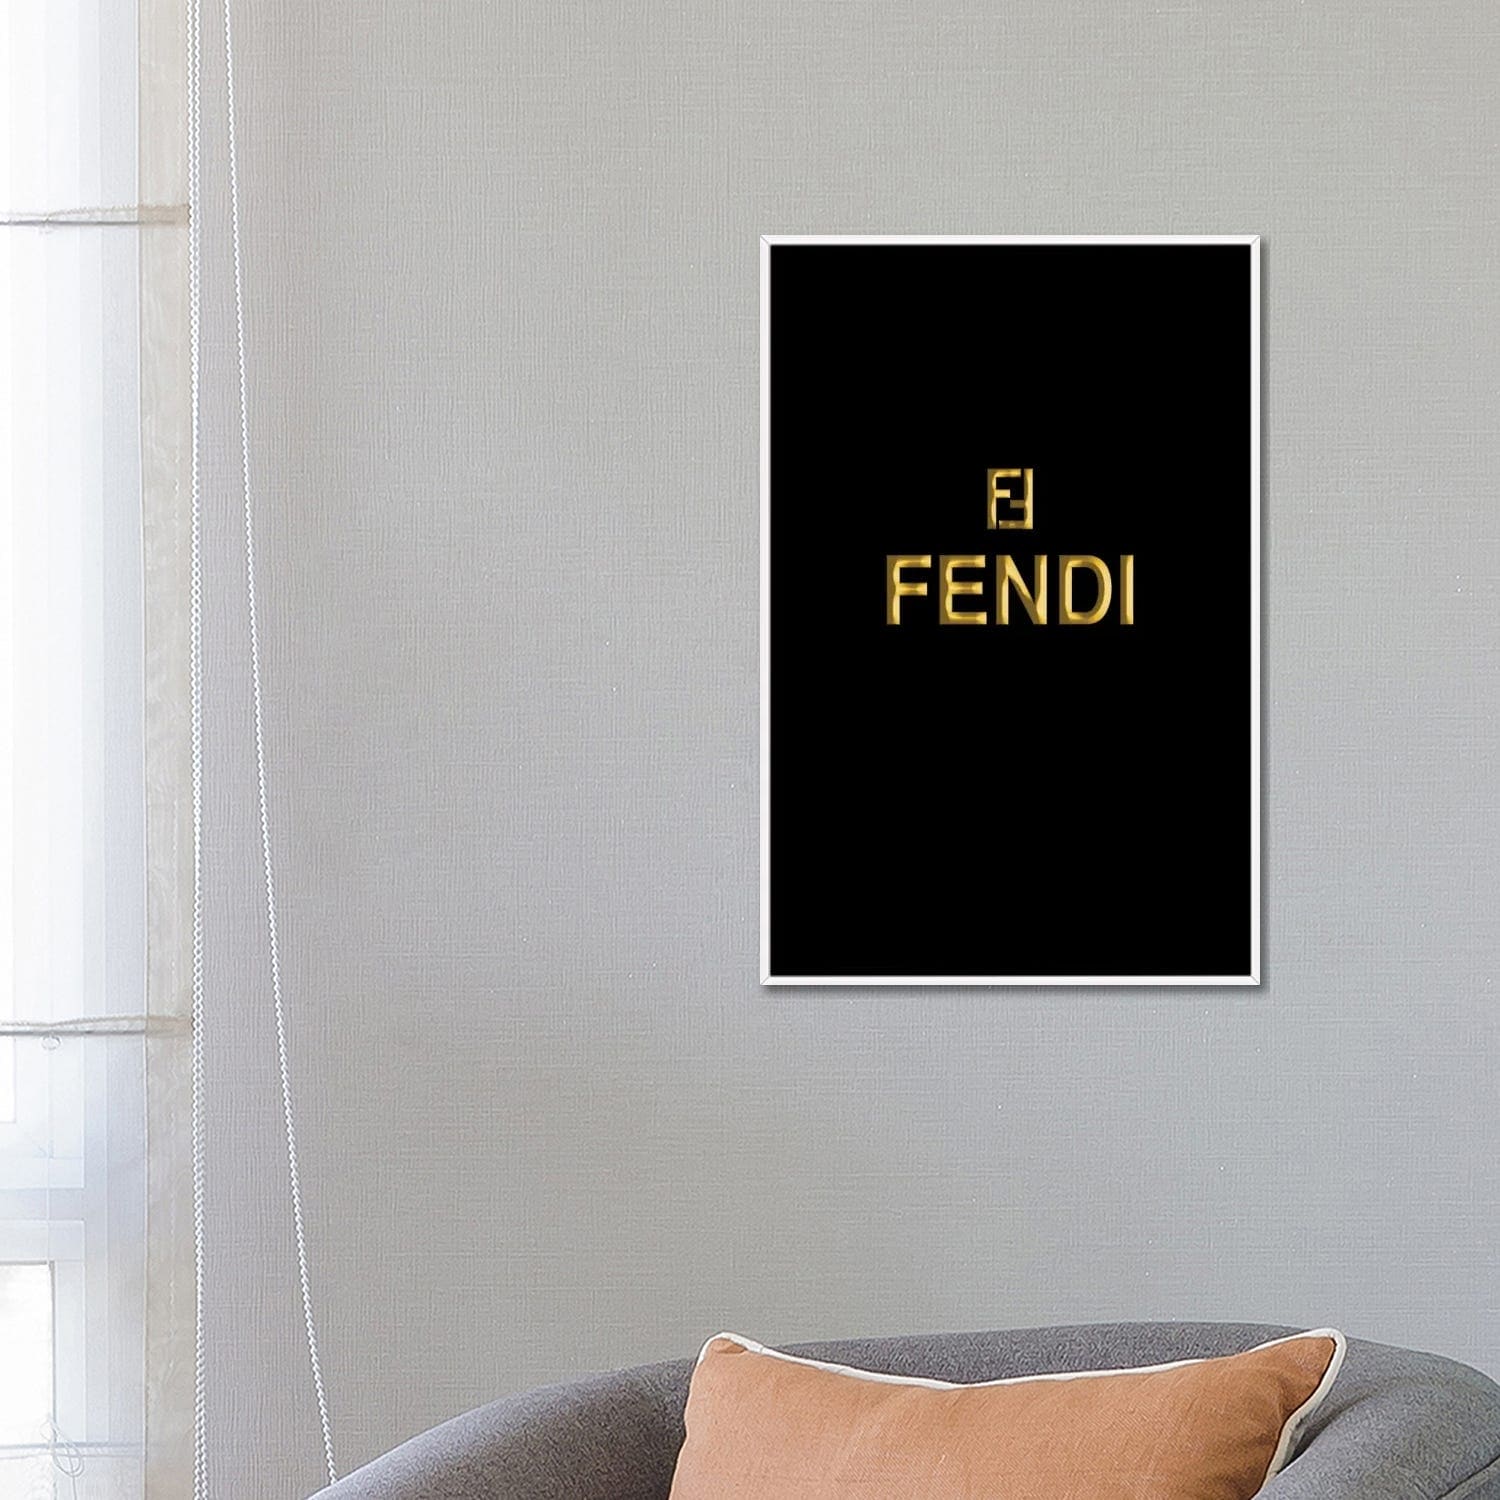 Fendi wallpaper  Fendi wallpaper, Fendi logo art, Fendi logo wallpaper